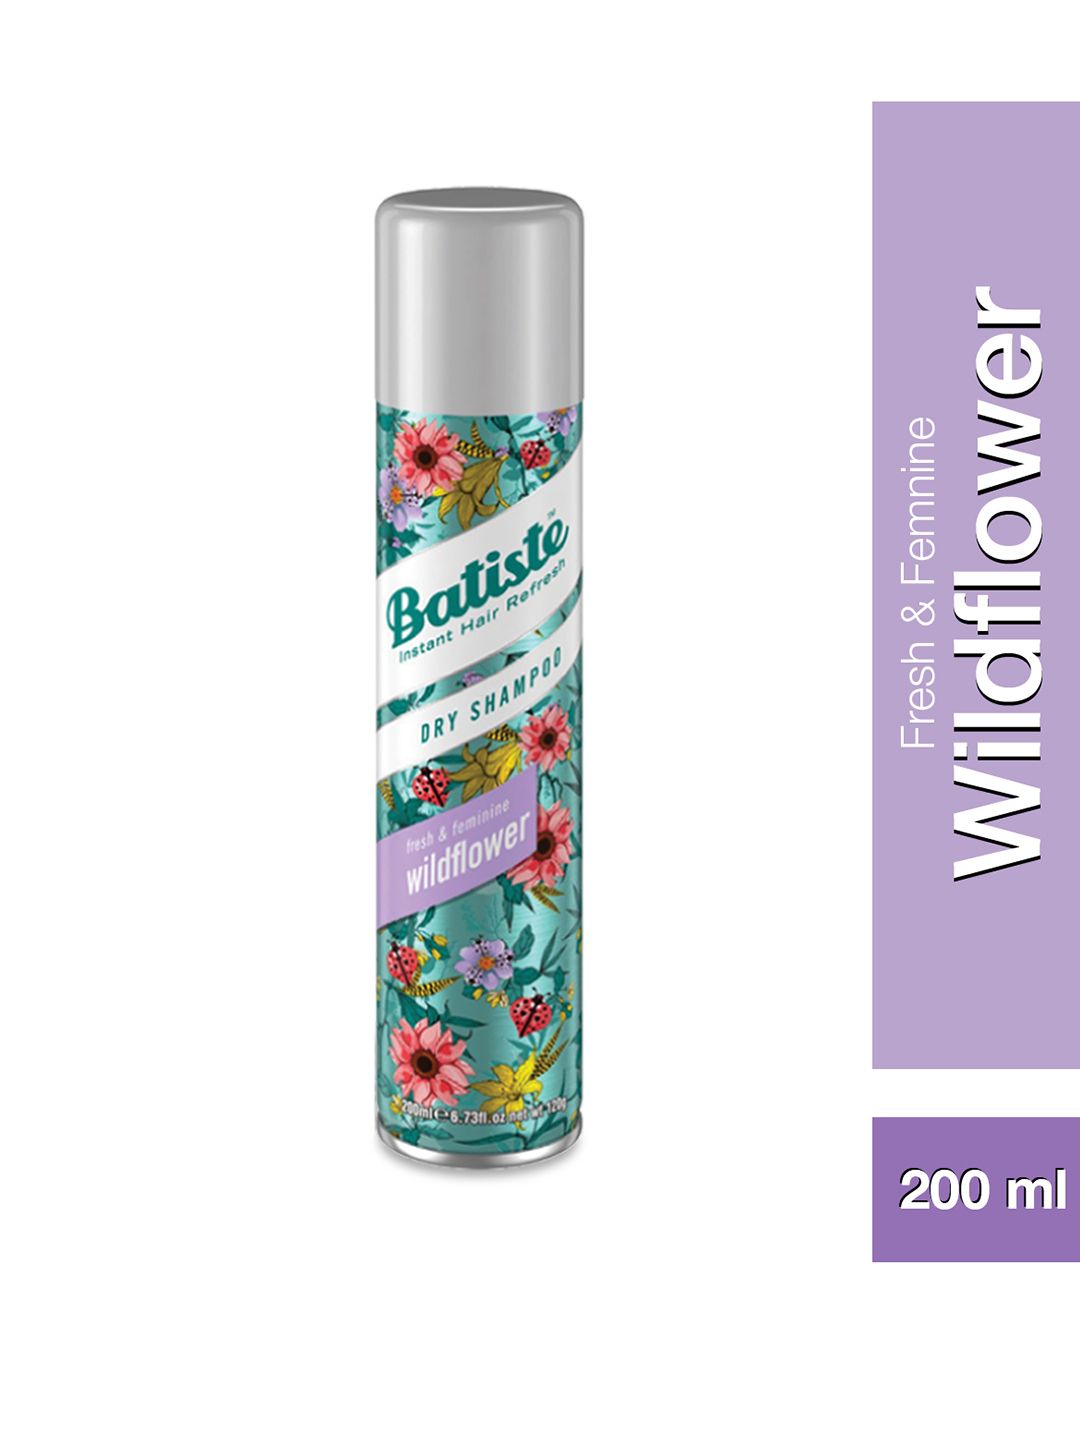 Batiste Instant Hair Refresh Fresh & Feminine Wildflower Dry Shampoo - 200 ml Price in India